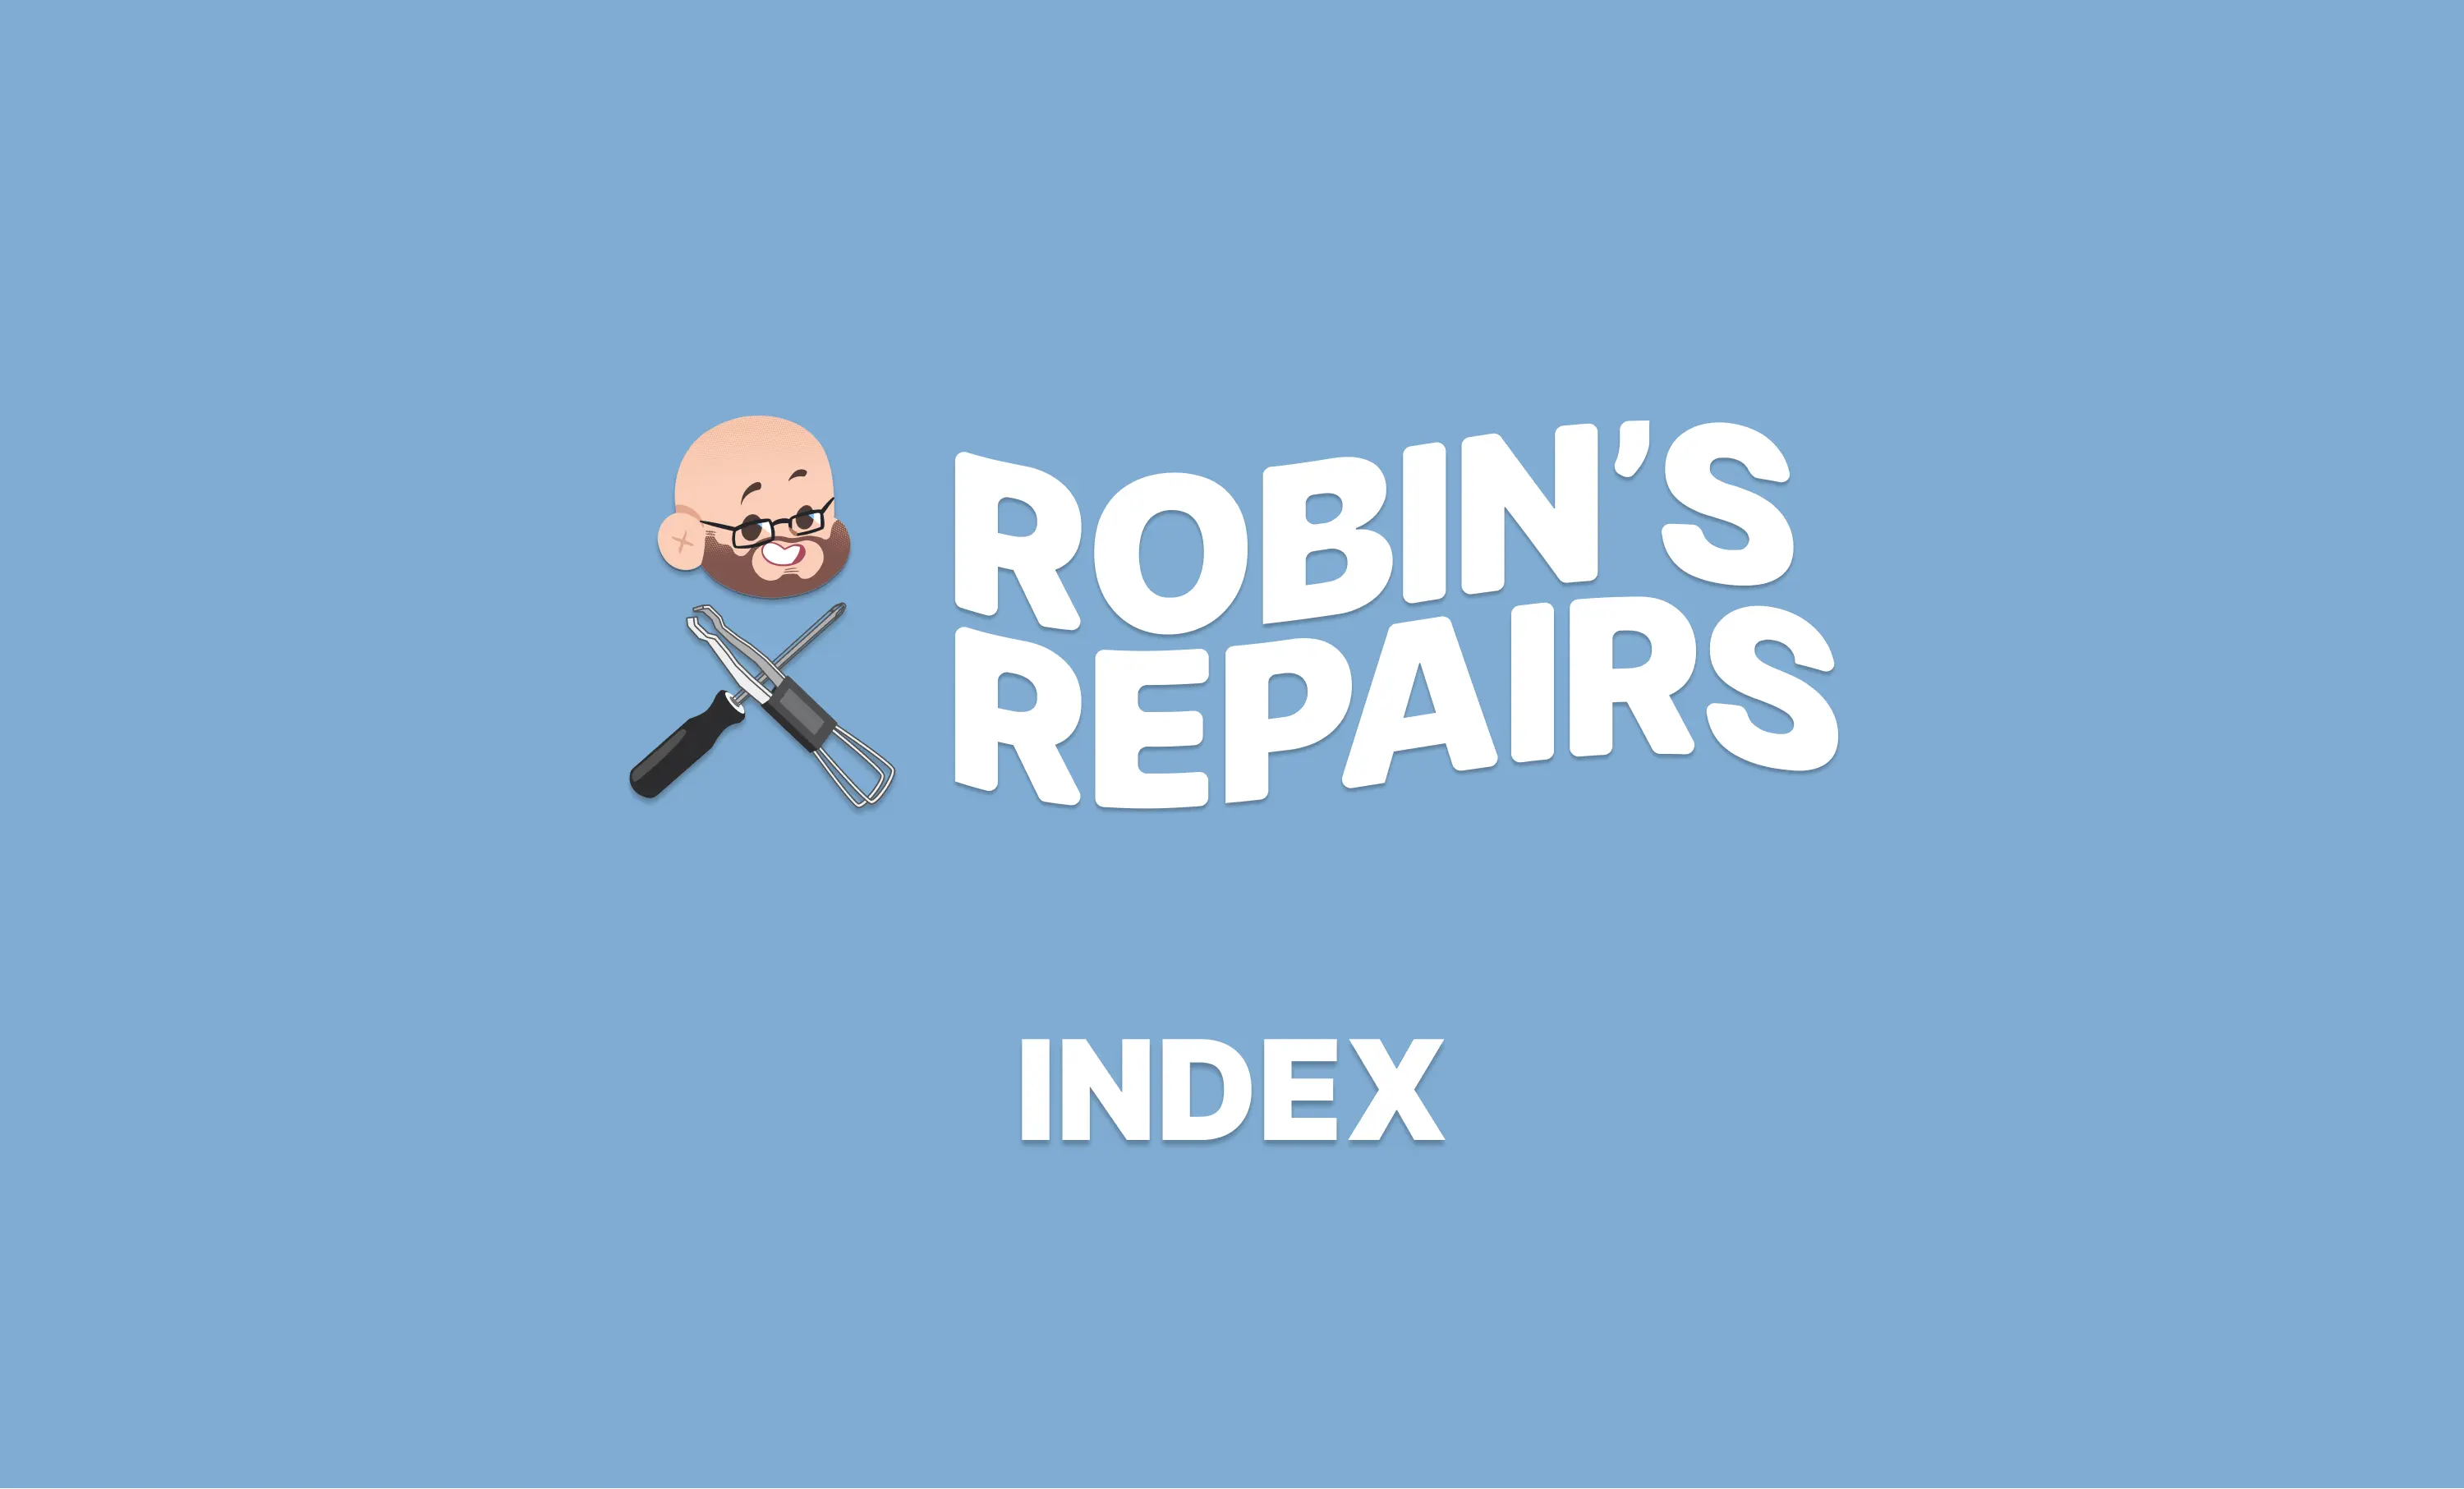 Robin's Repairs Index